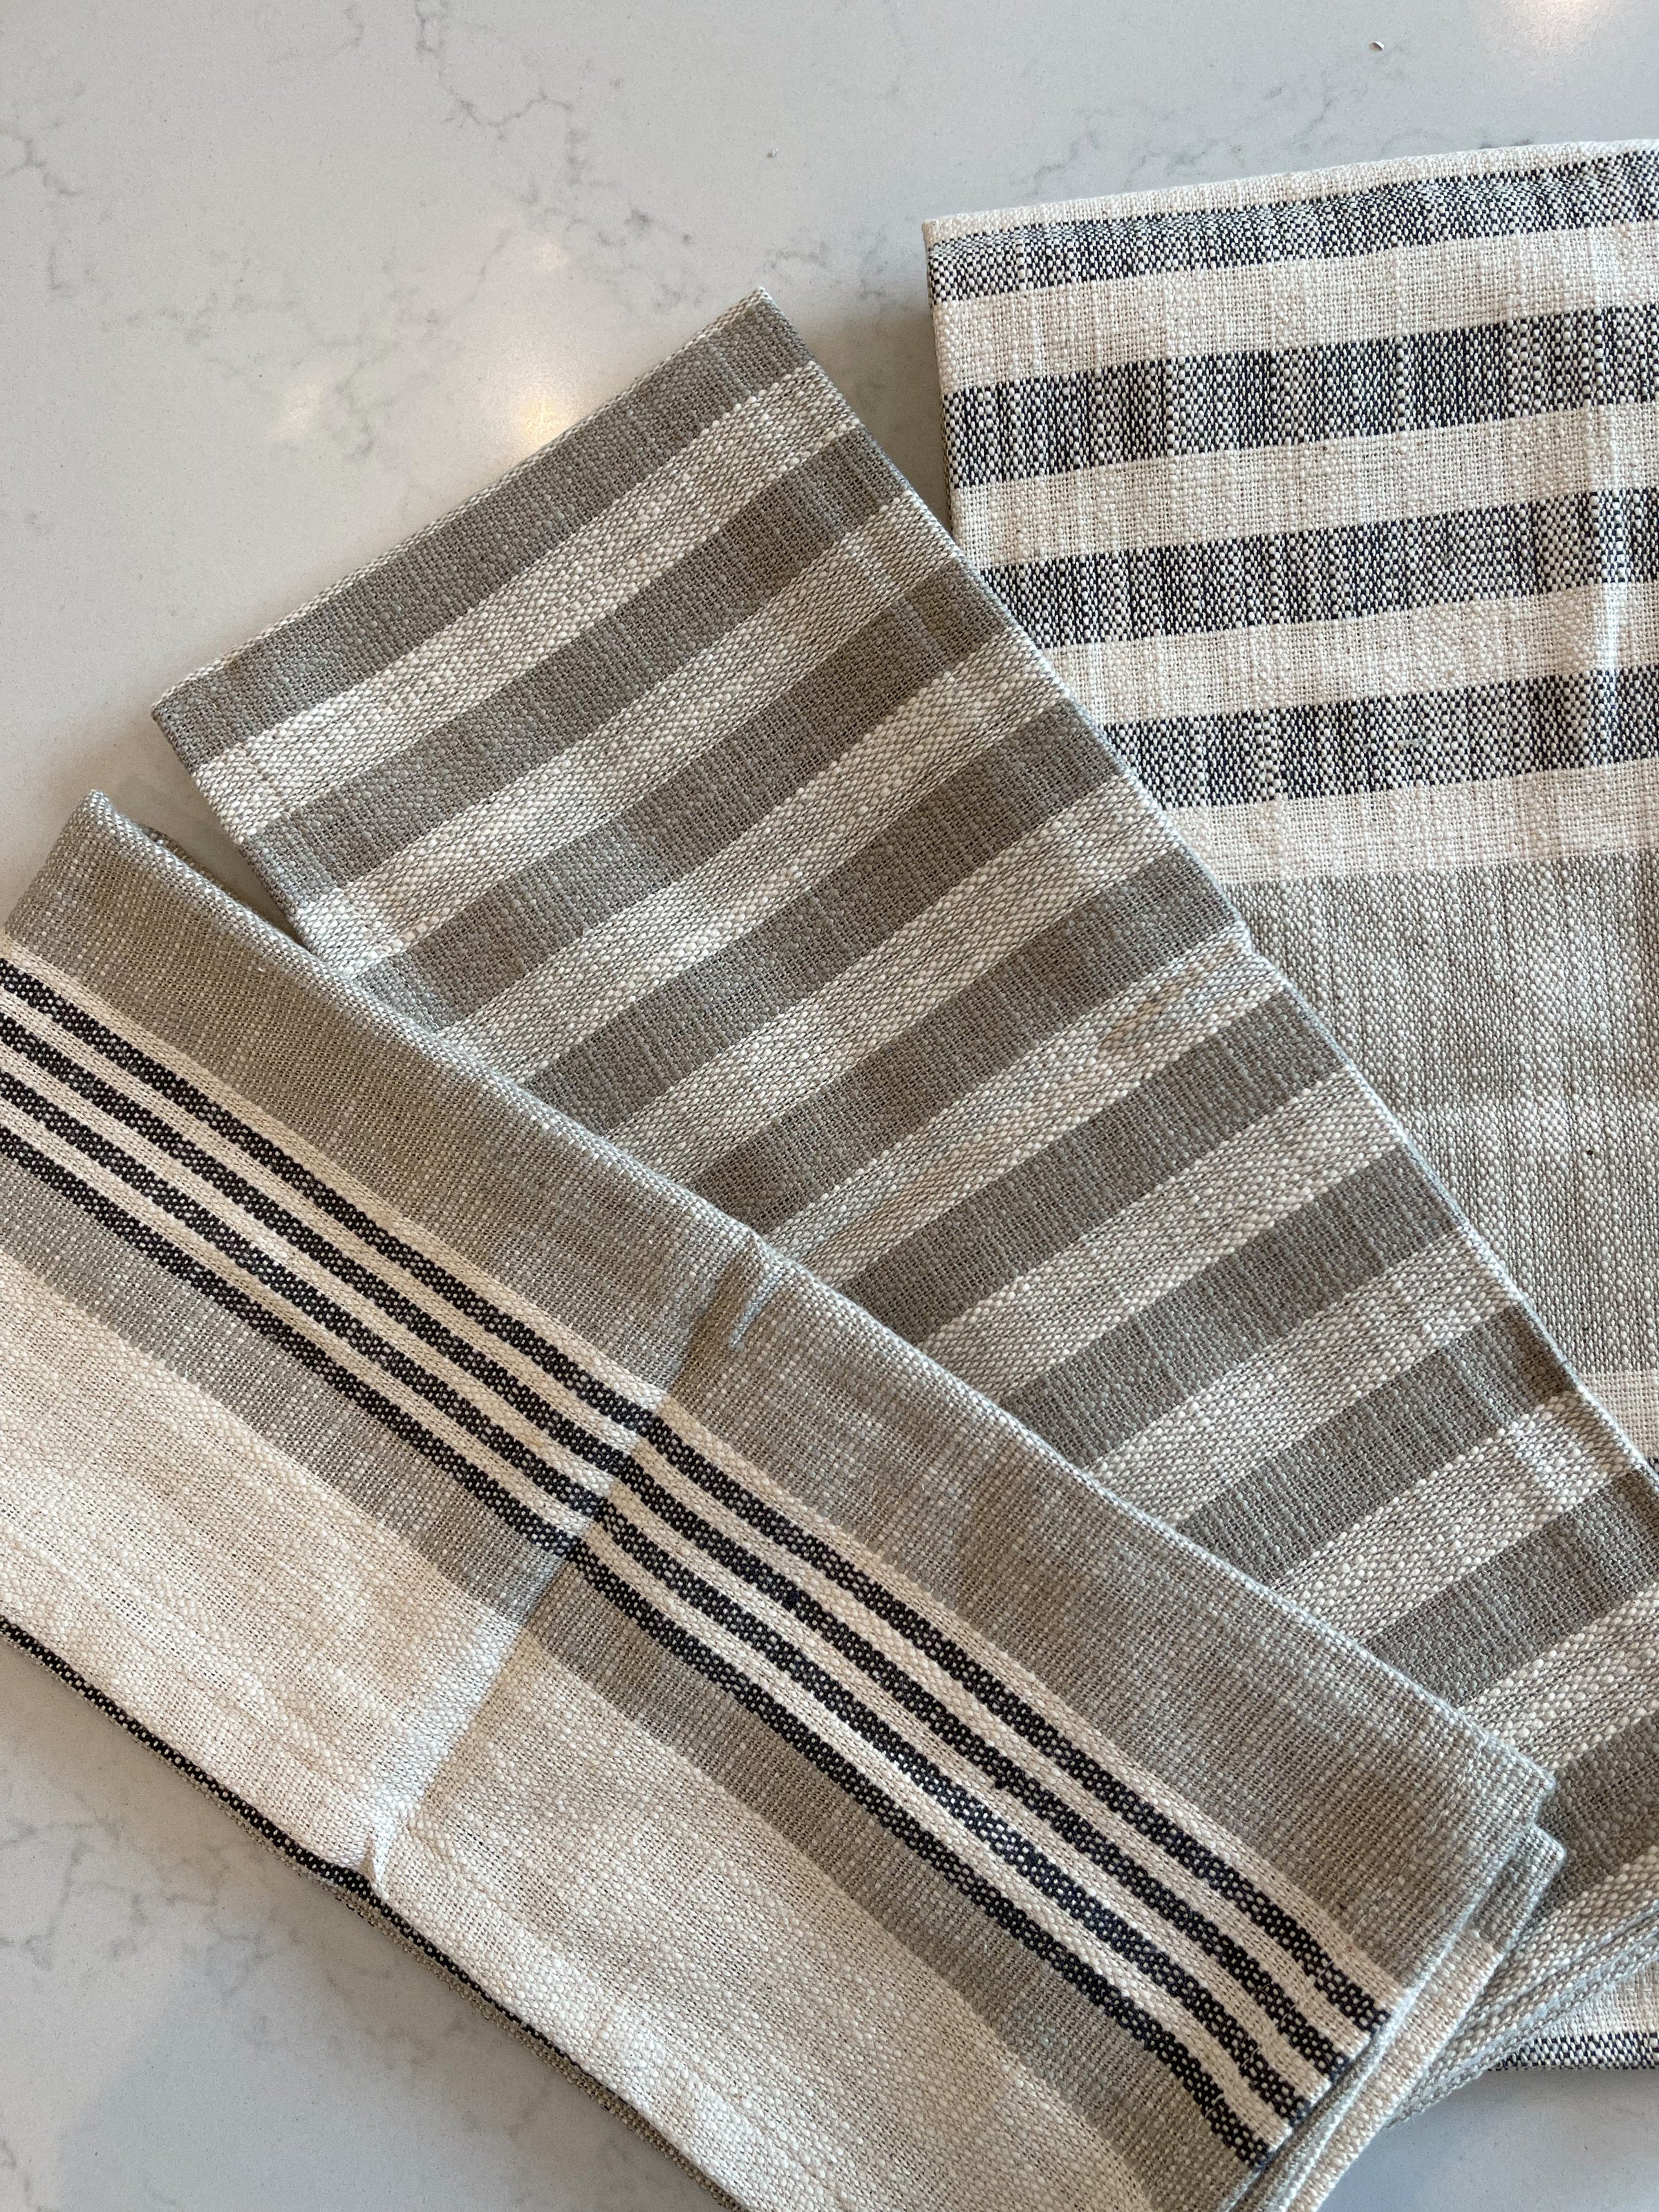 Grey, White, Green Striped Tea Towel Set